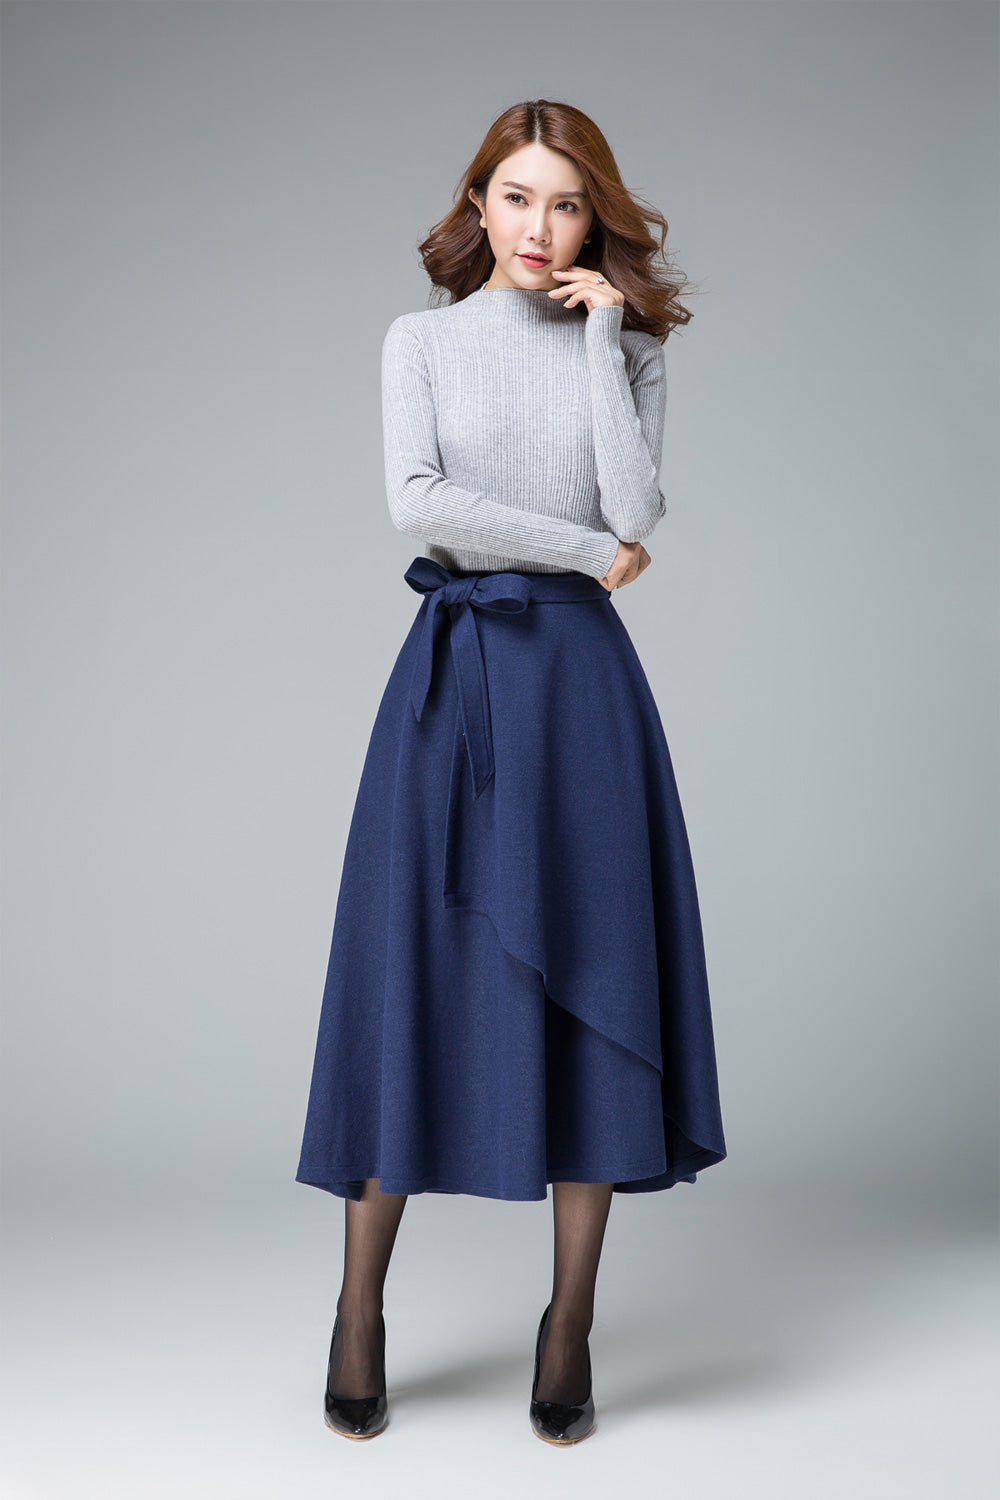 evening skirt, blue skirt, wool skirt, layered skirt, tie belt skirt 1836#